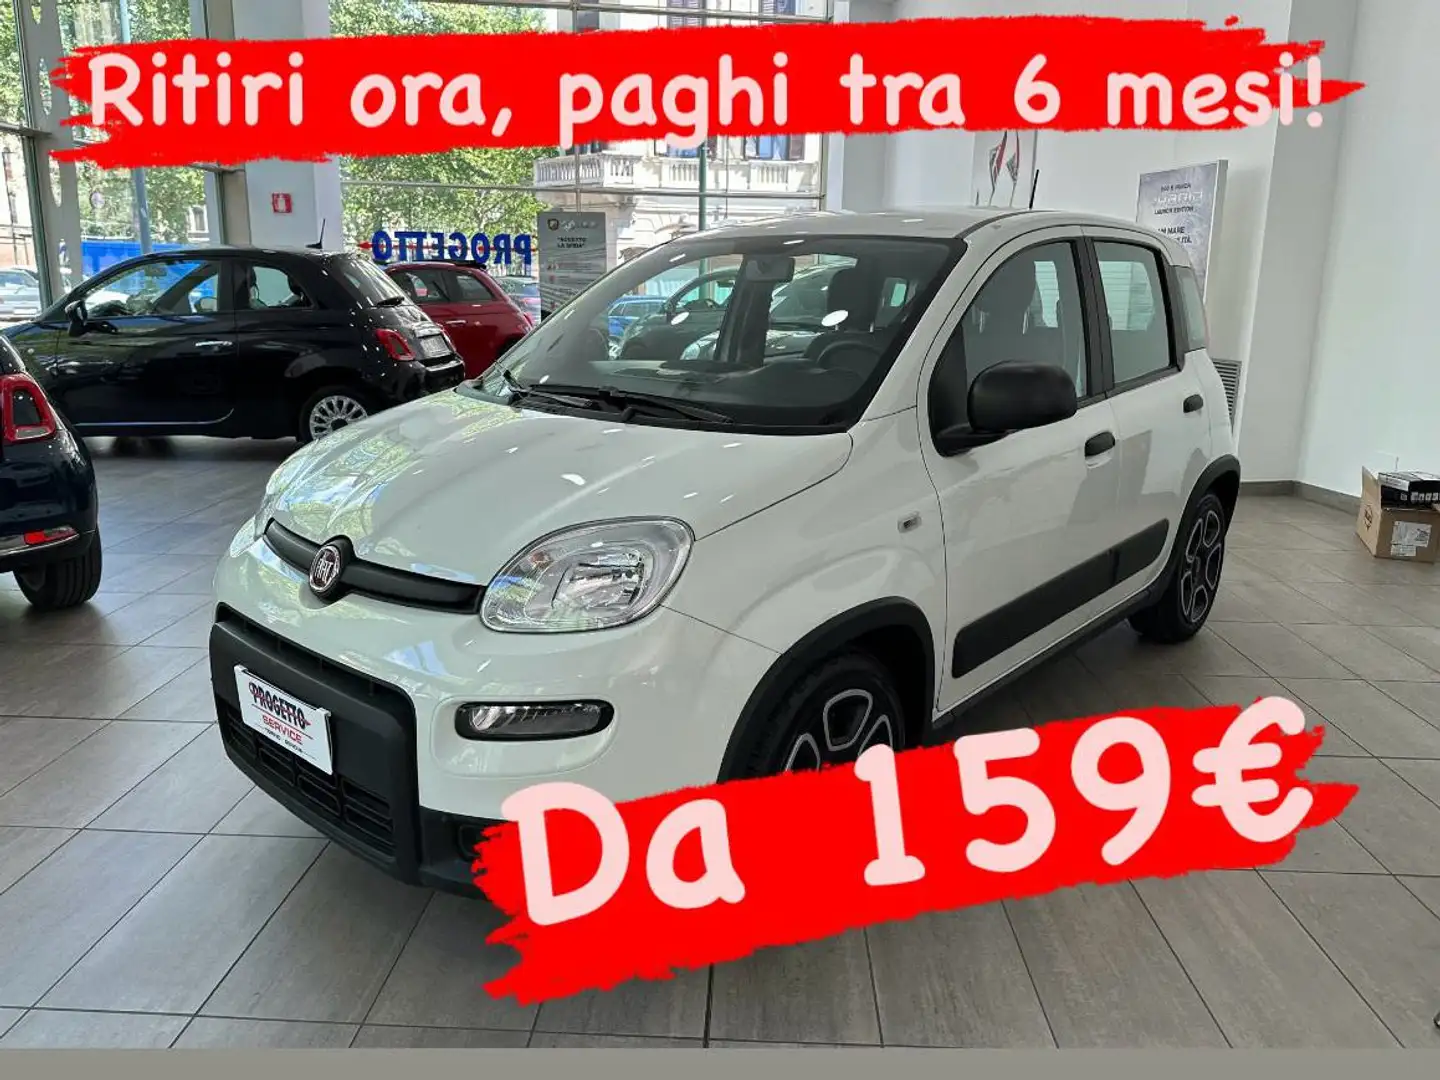 Fiat Panda DA 159€ TRA 6 MESI! Bianco - 1